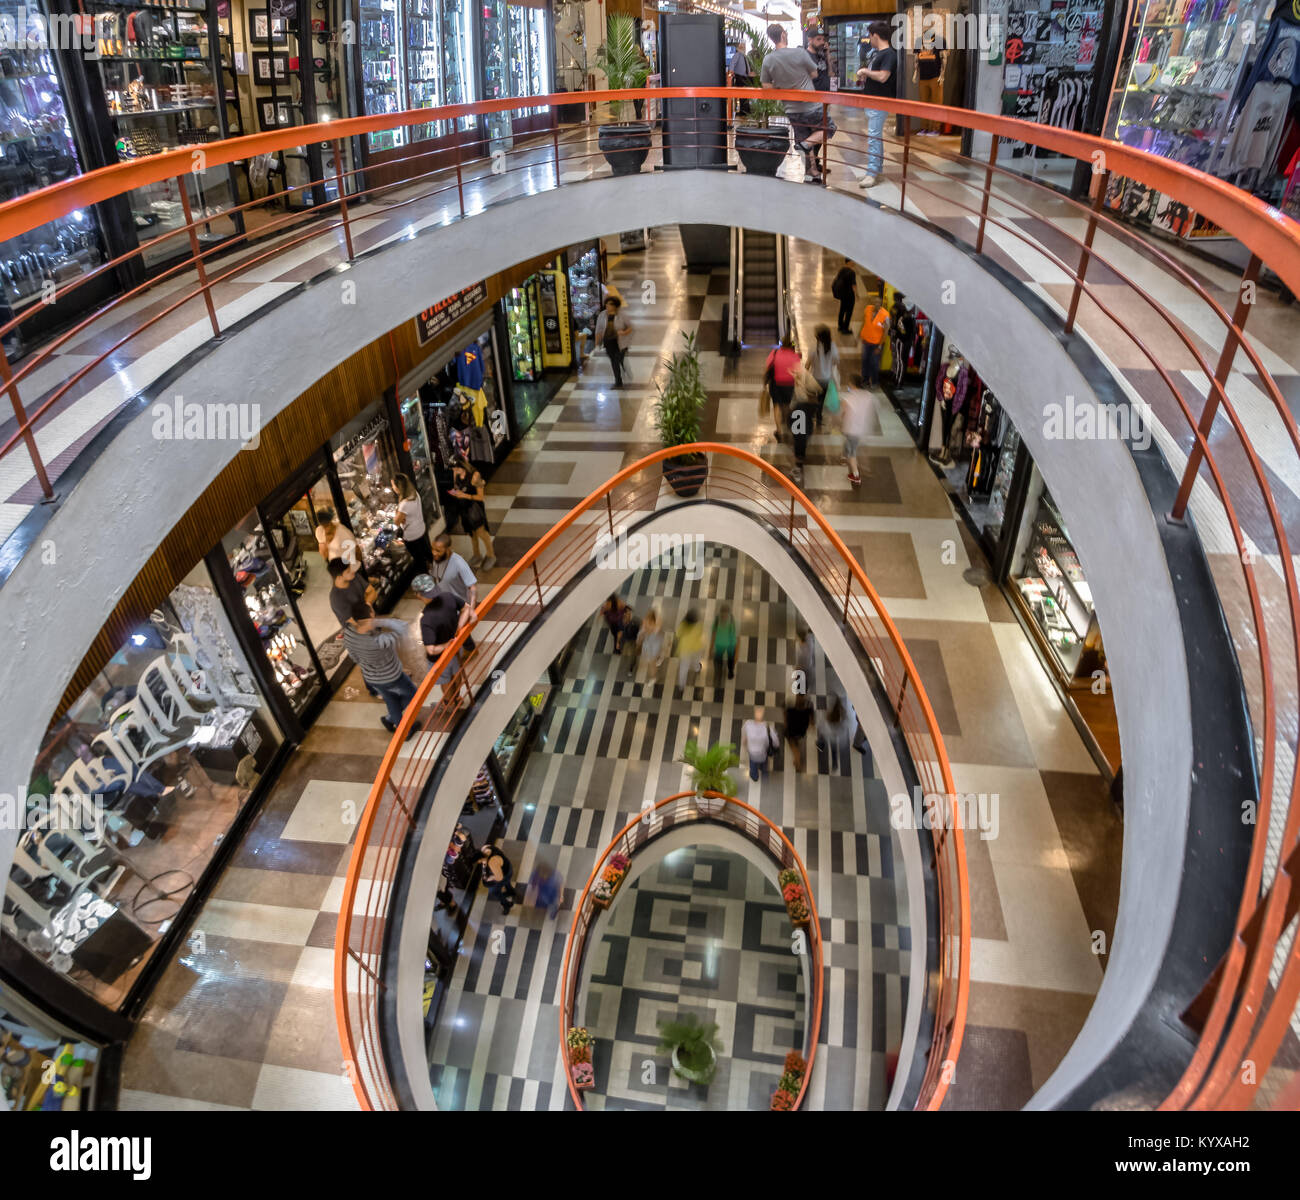 Galeria do Rock (Rock Gallery) Shopping Mall in Dowtown Sao Paulo - Sao  Paulo, Brazil Stock Photo - Alamy